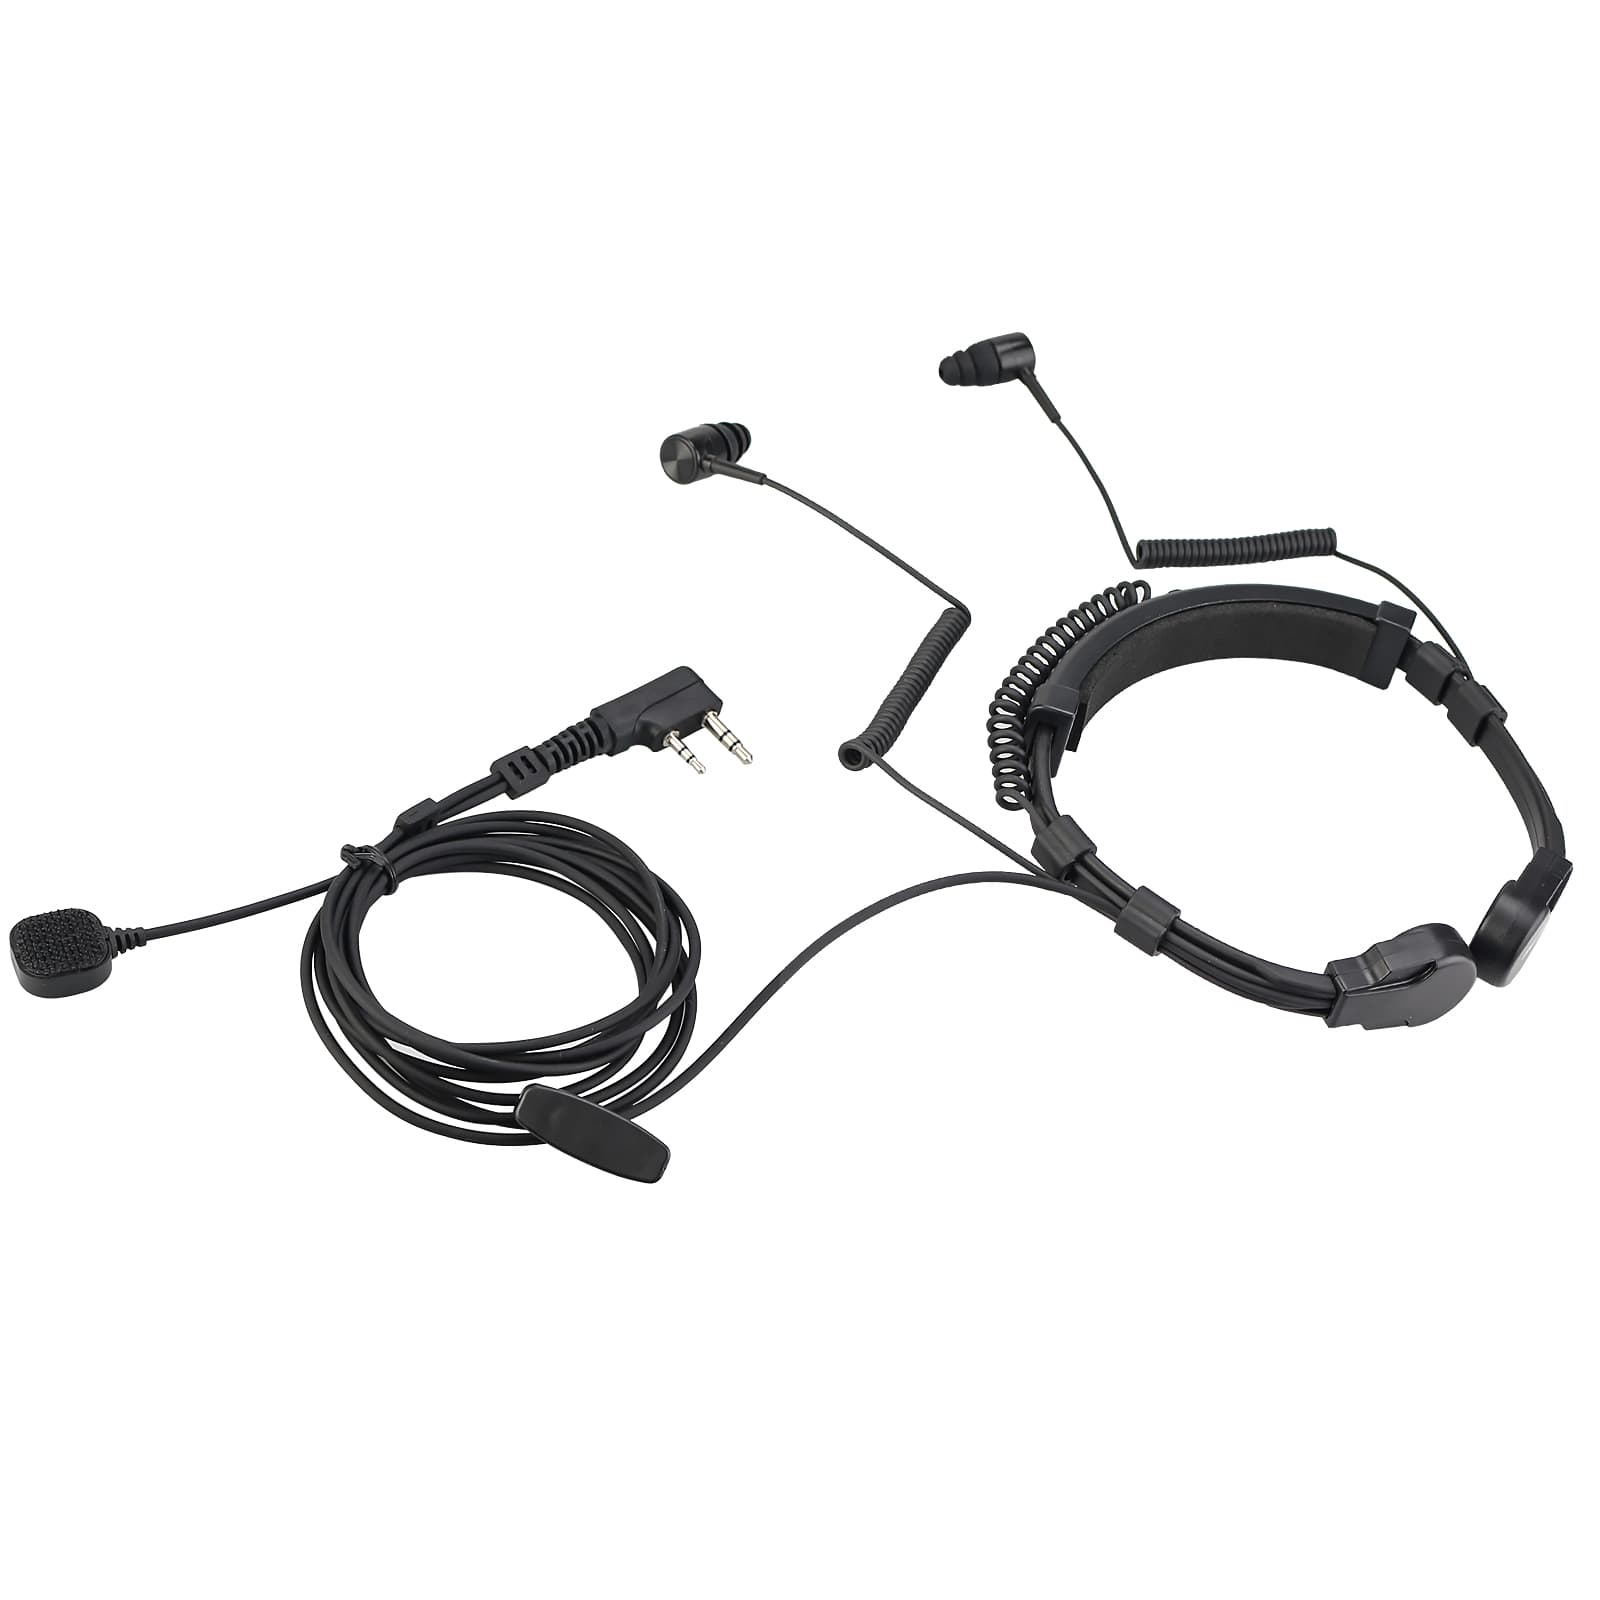 ETK007 noise reduction cycling headset